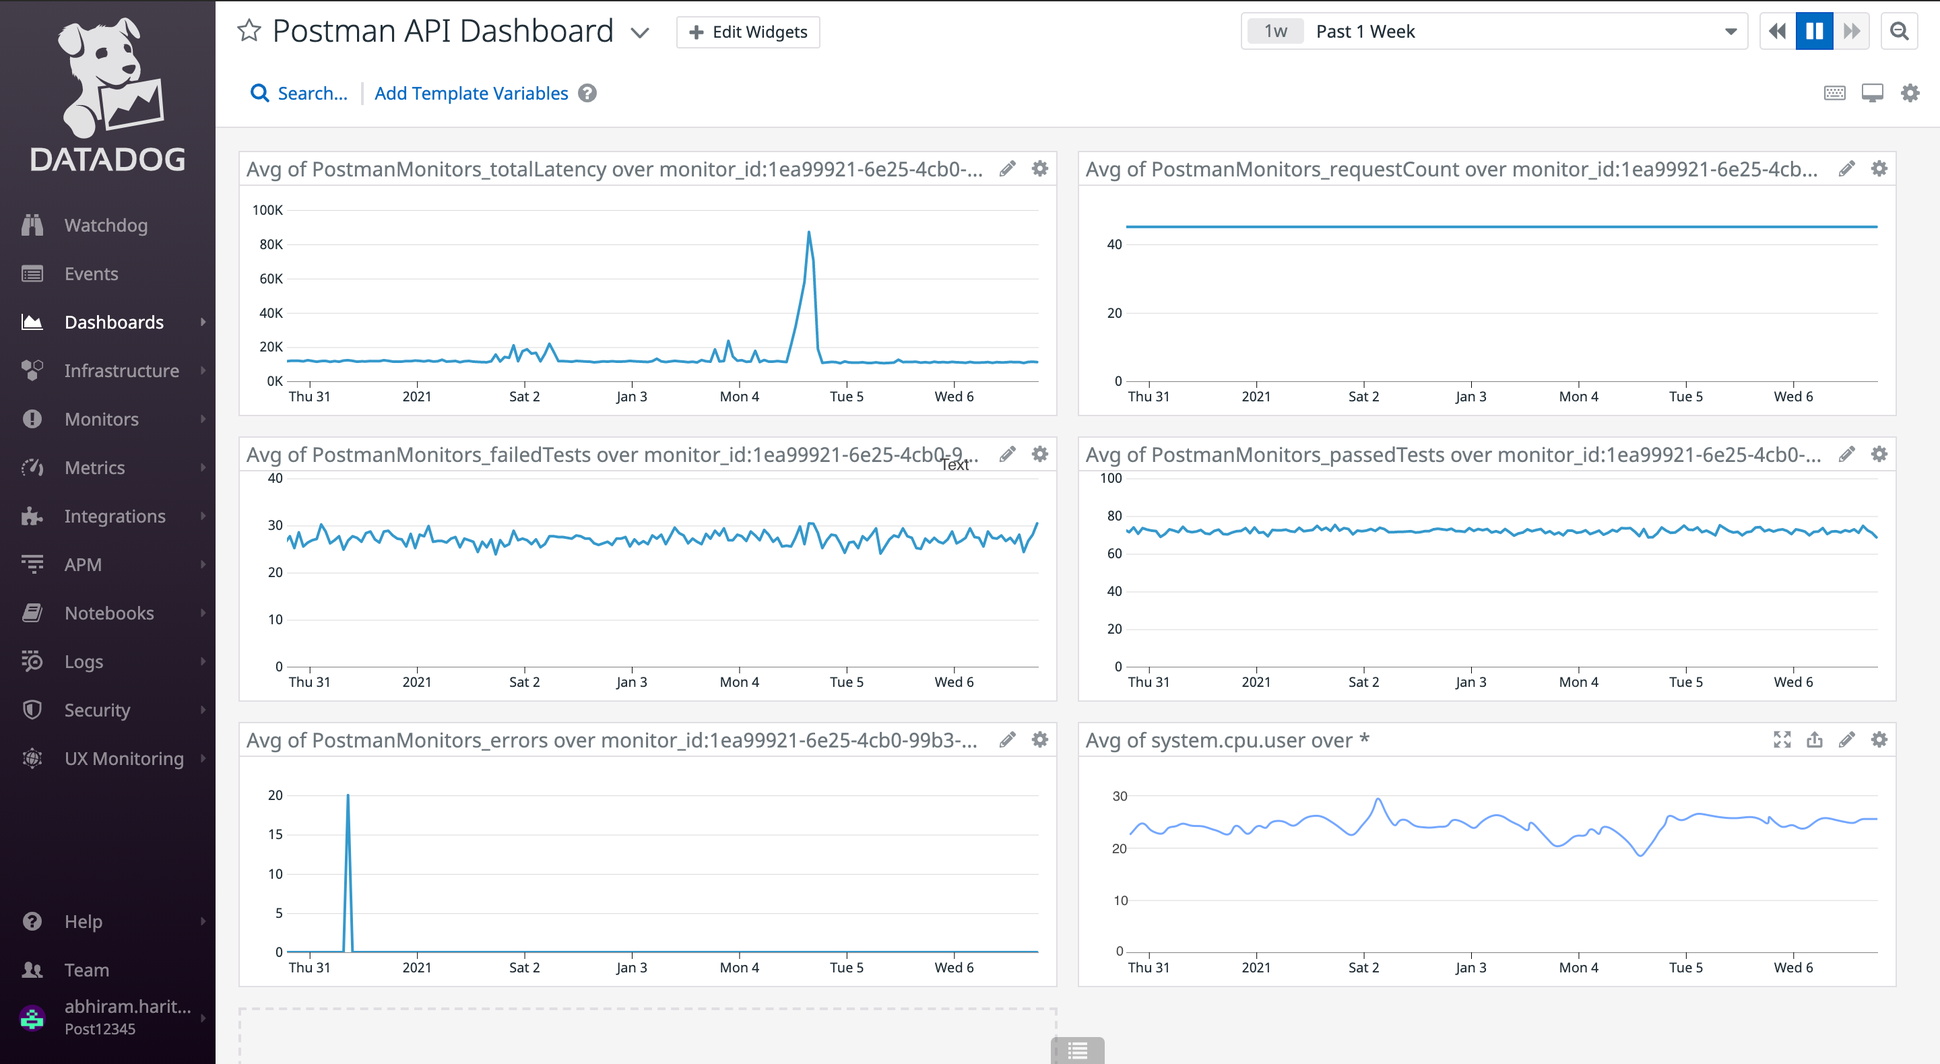 A dashboard to analyze the API metrics and system metrics together